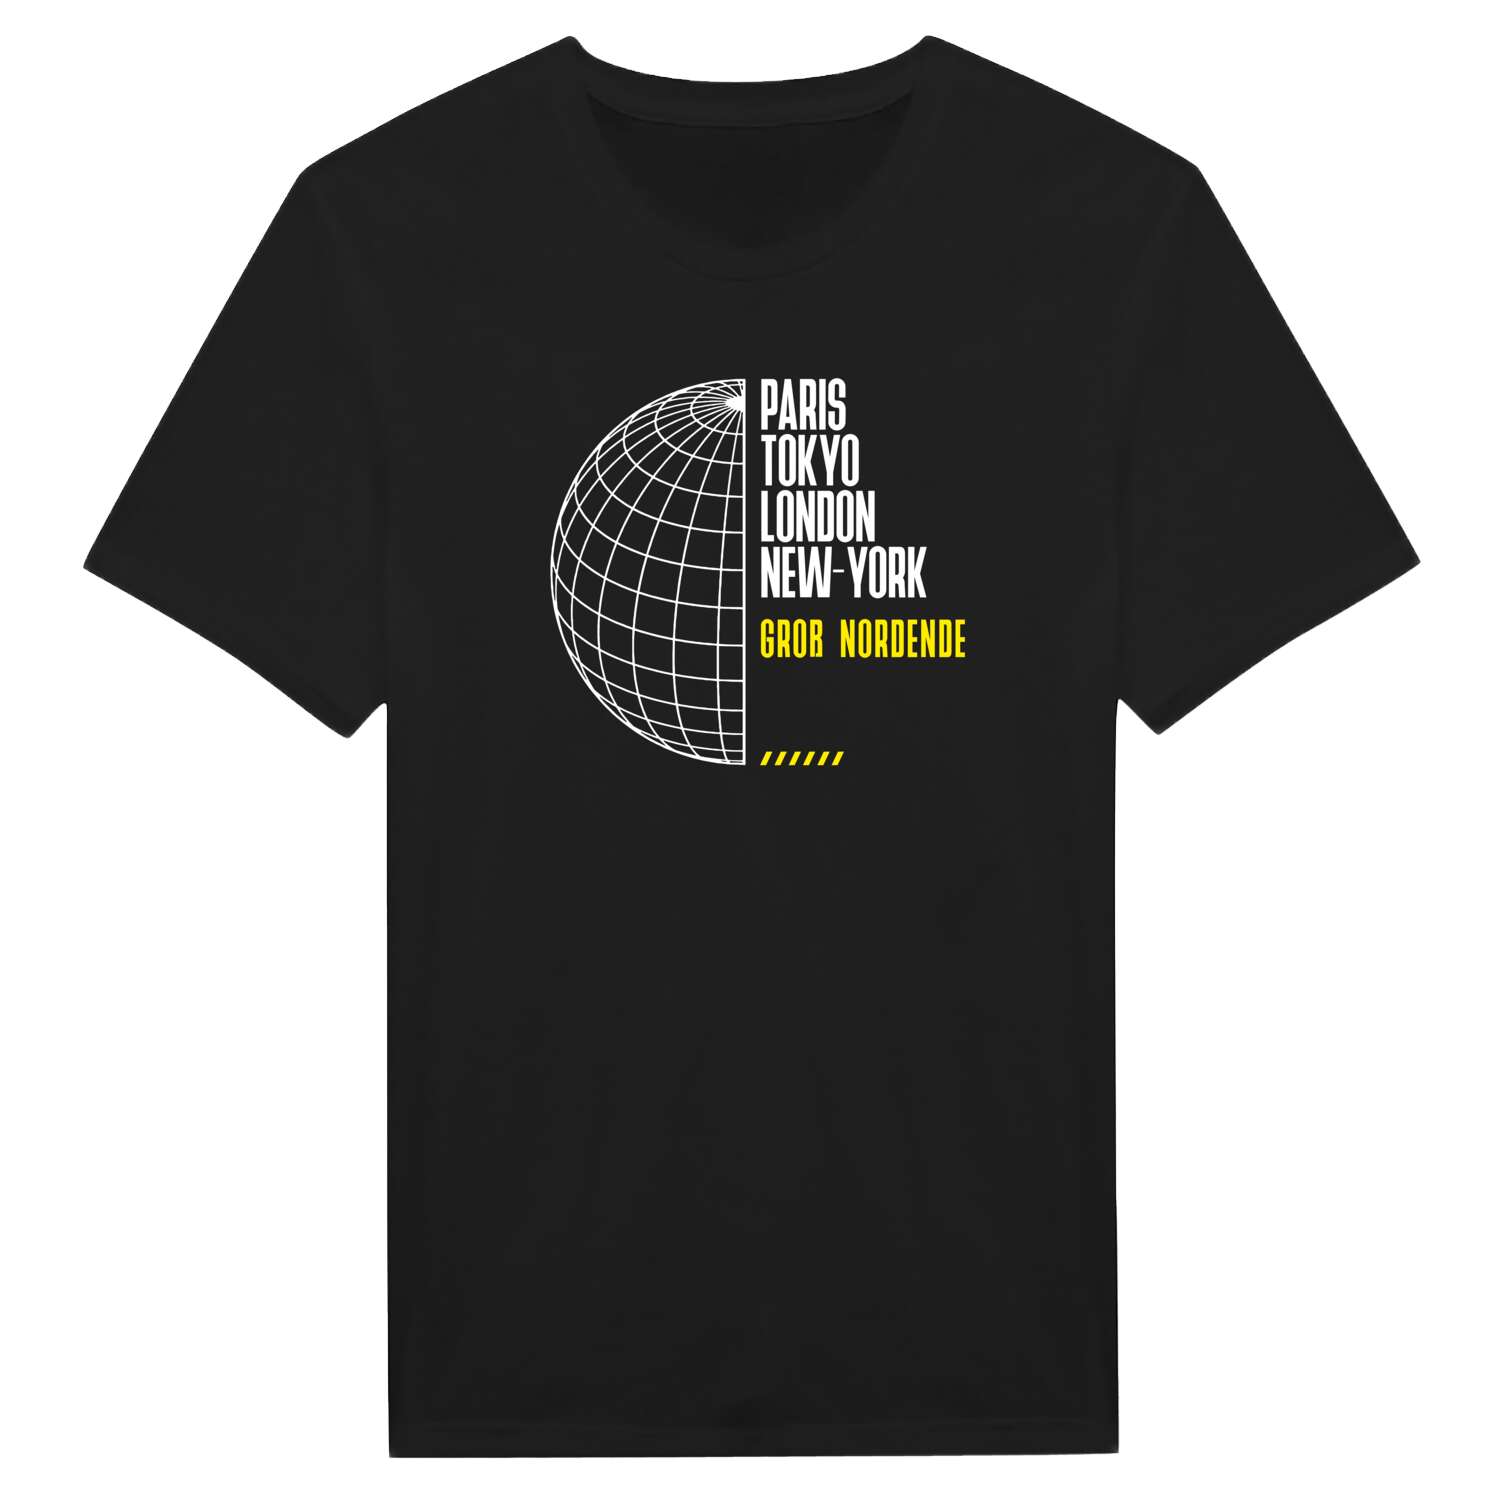 Groß Nordende T-Shirt »Paris Tokyo London«